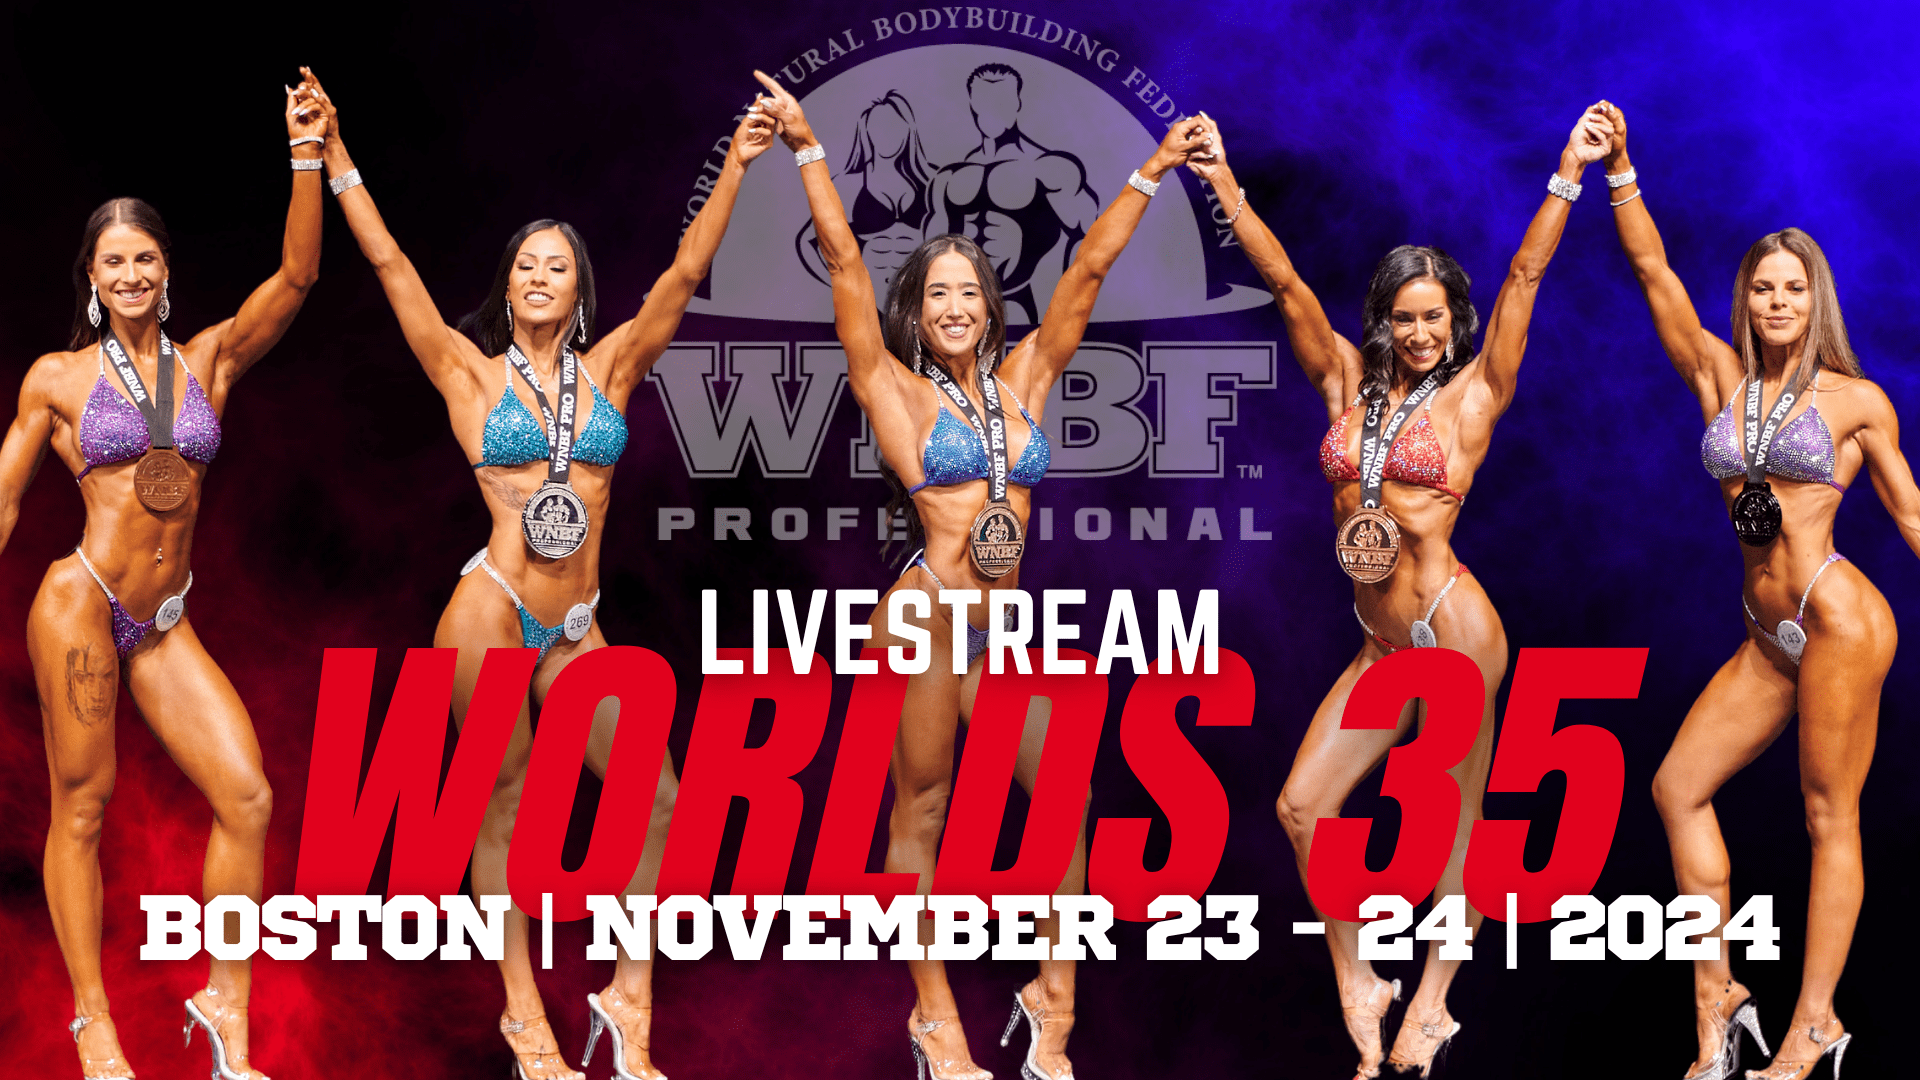 WNBF Worlds 35 Livestream Bikini Announcement Buy Tickets Online